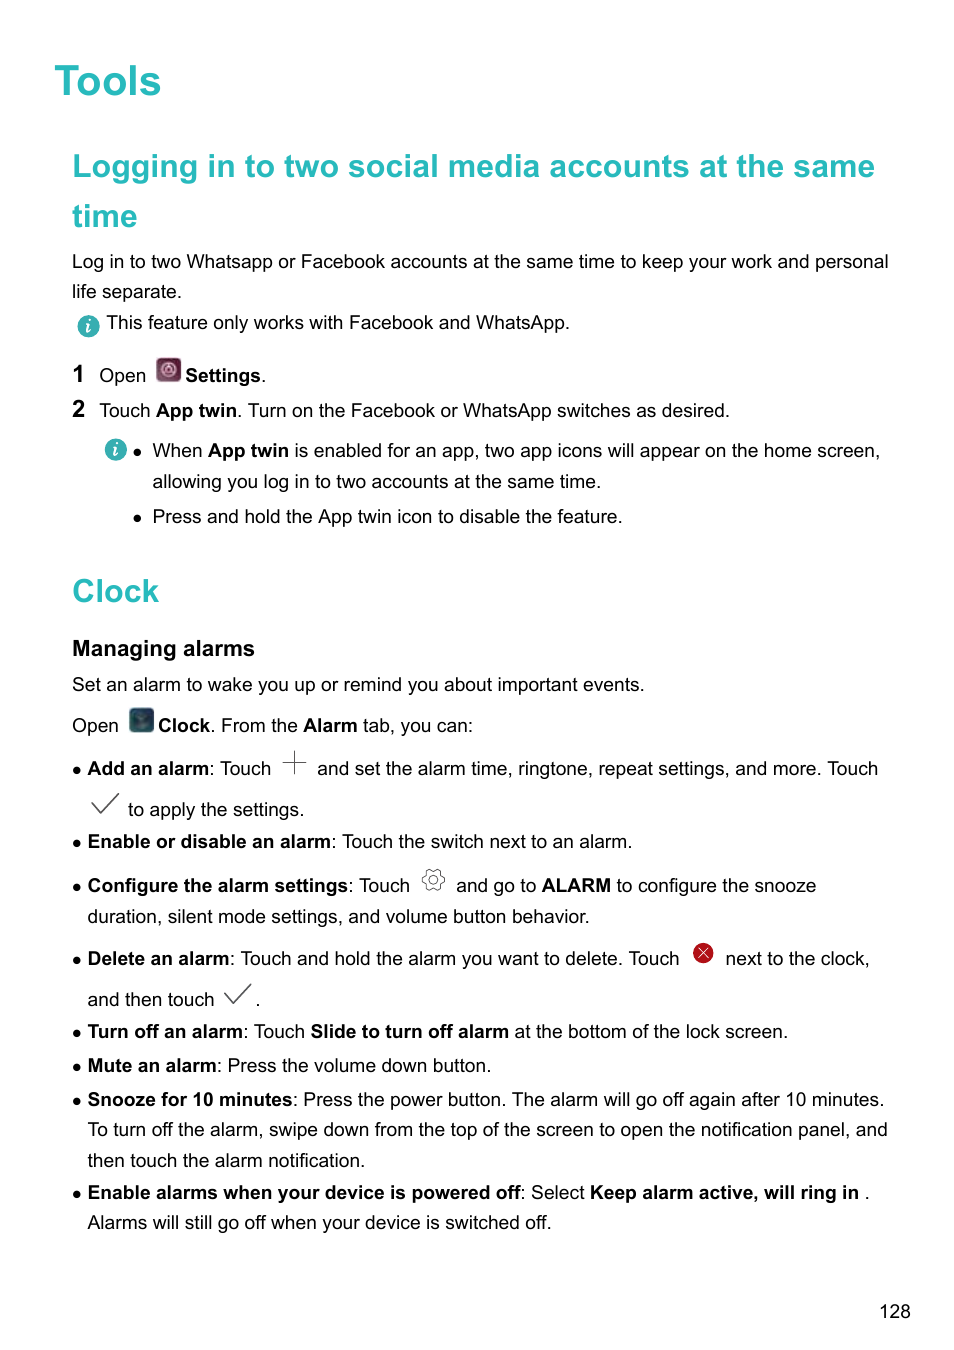 Tools, Clock, Managing alarms | Huawei P10 User Manual | Page 134 / 158